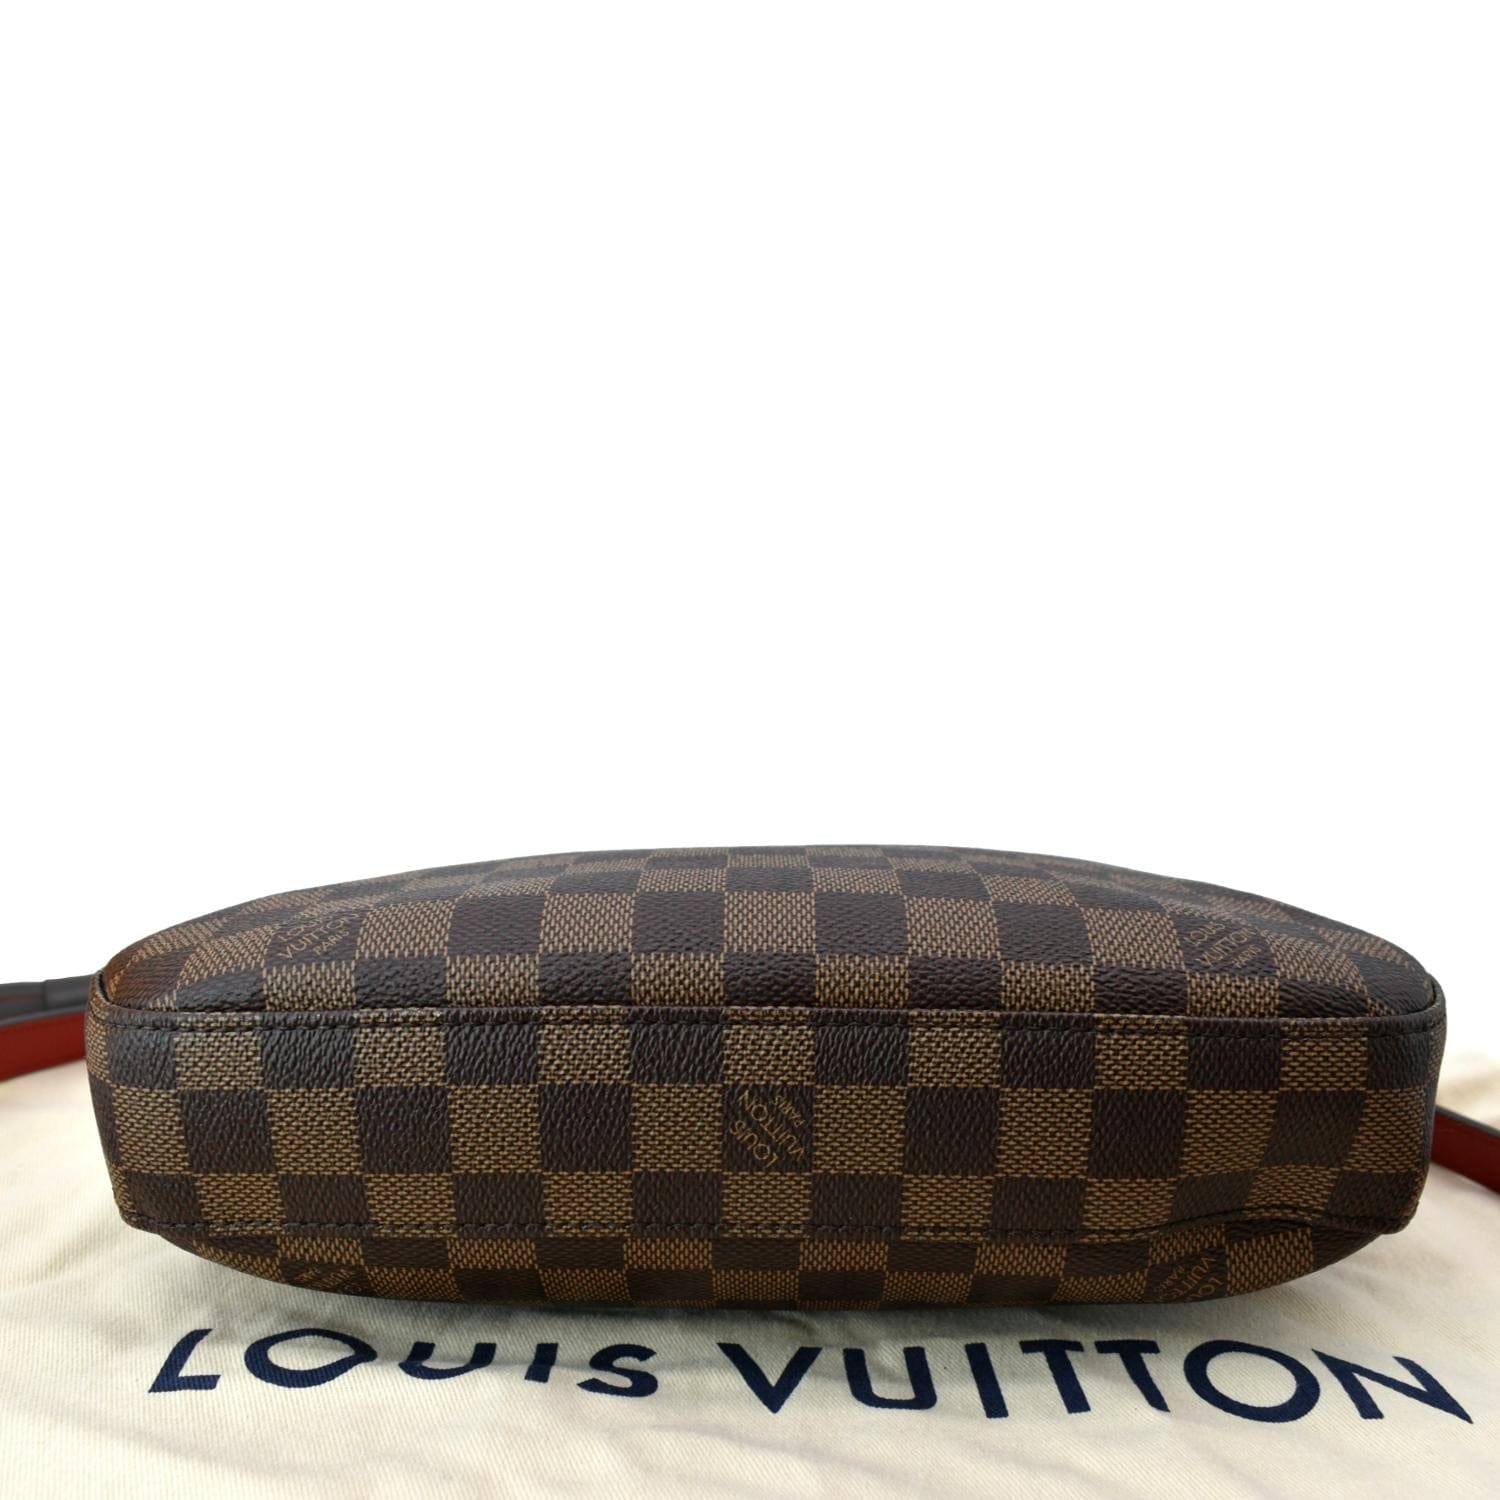 Sold at Auction: Louis Vuitton, LOUIS VUITTON DAMIER SOUTH BANK BESACE  CROSSBODY